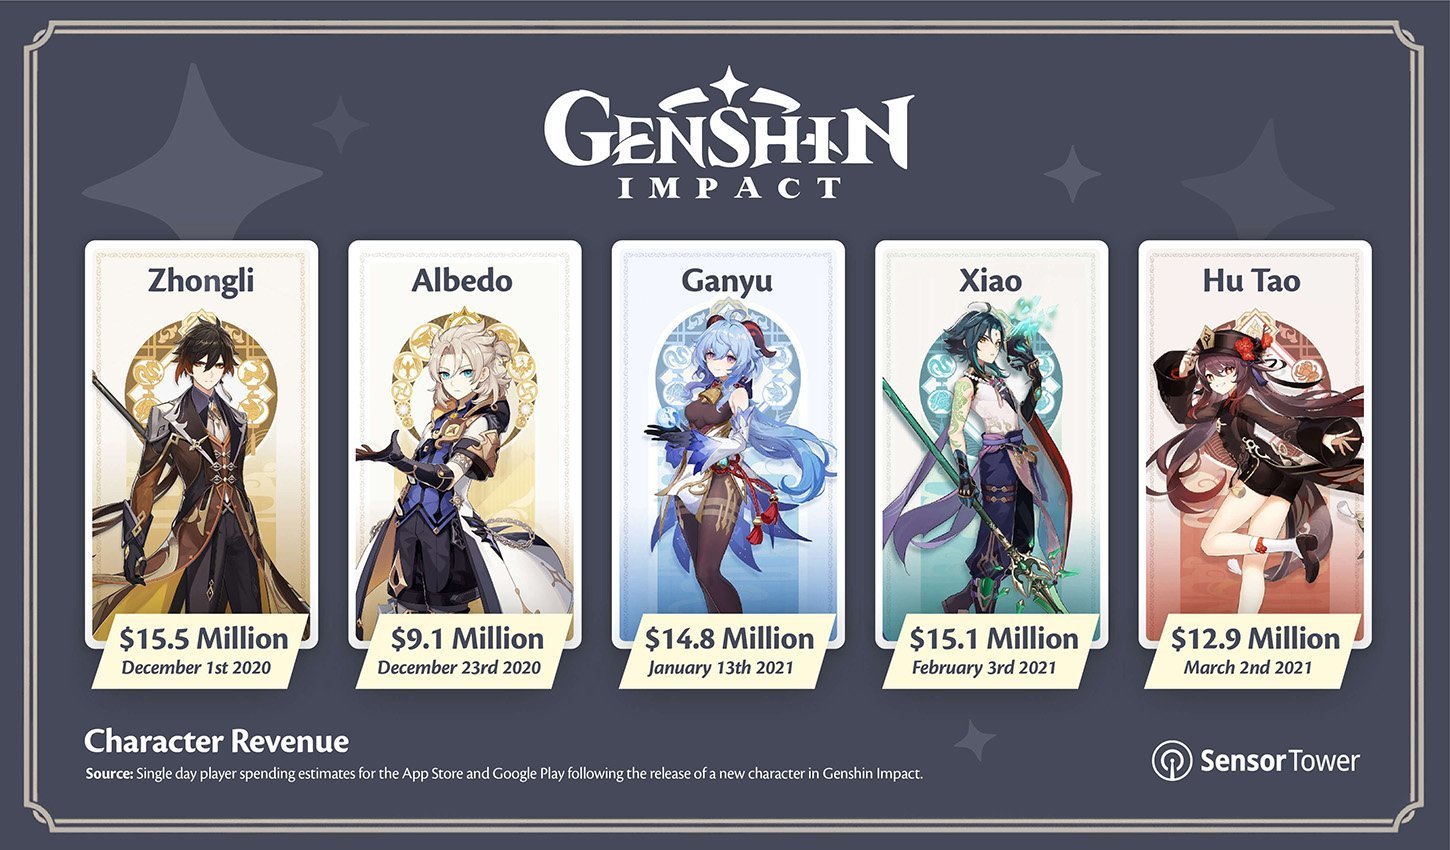 Genshin impact characters list. Genshin Impact персонажи. Карточка персонажа. Карточки персонажей Геншин. Сяо карточка персонажа.